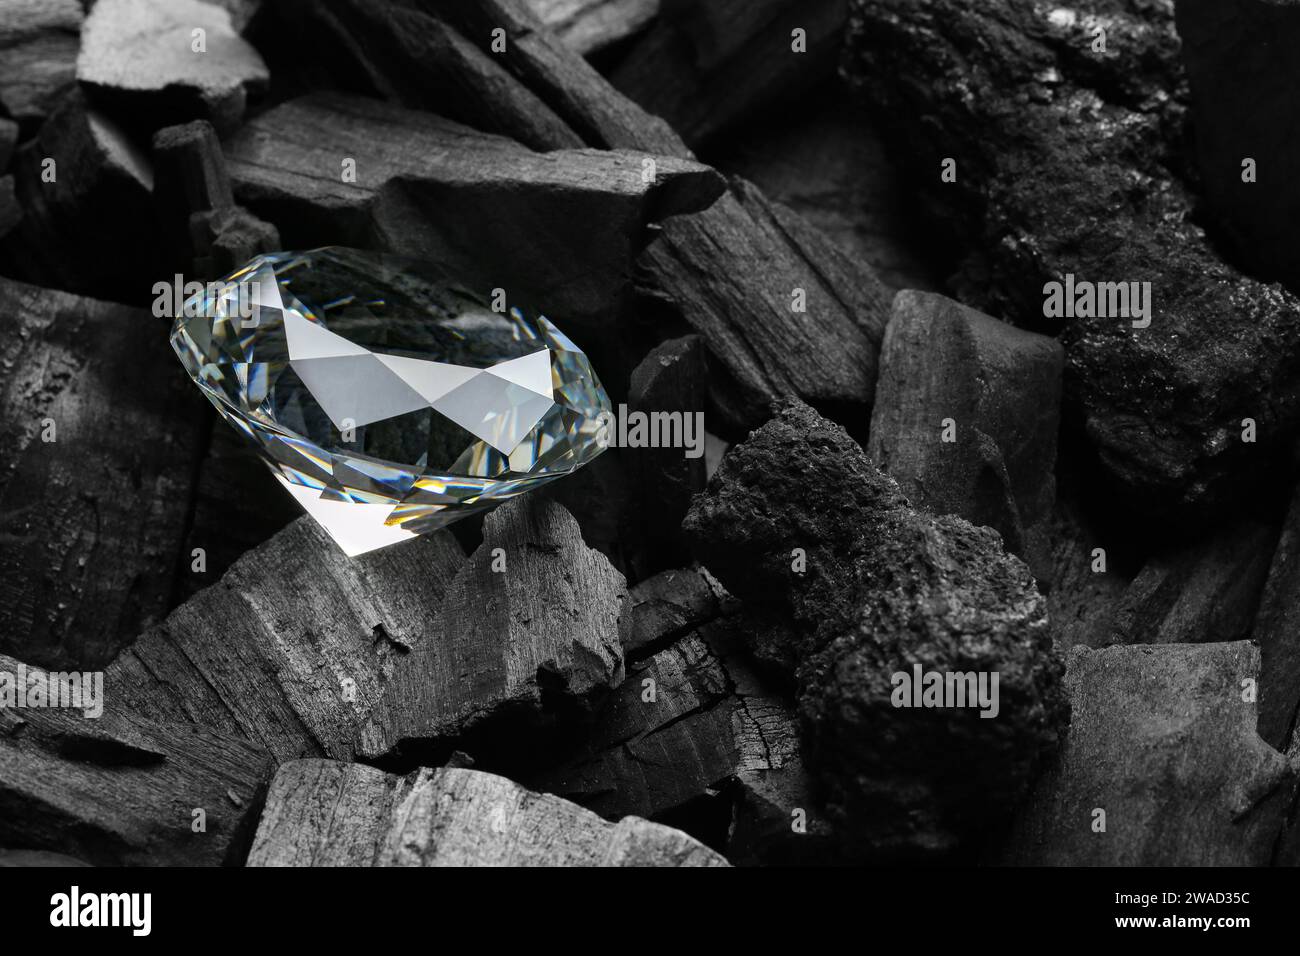 Beautiful shiny diamond on coal, closeup view Stock Photo